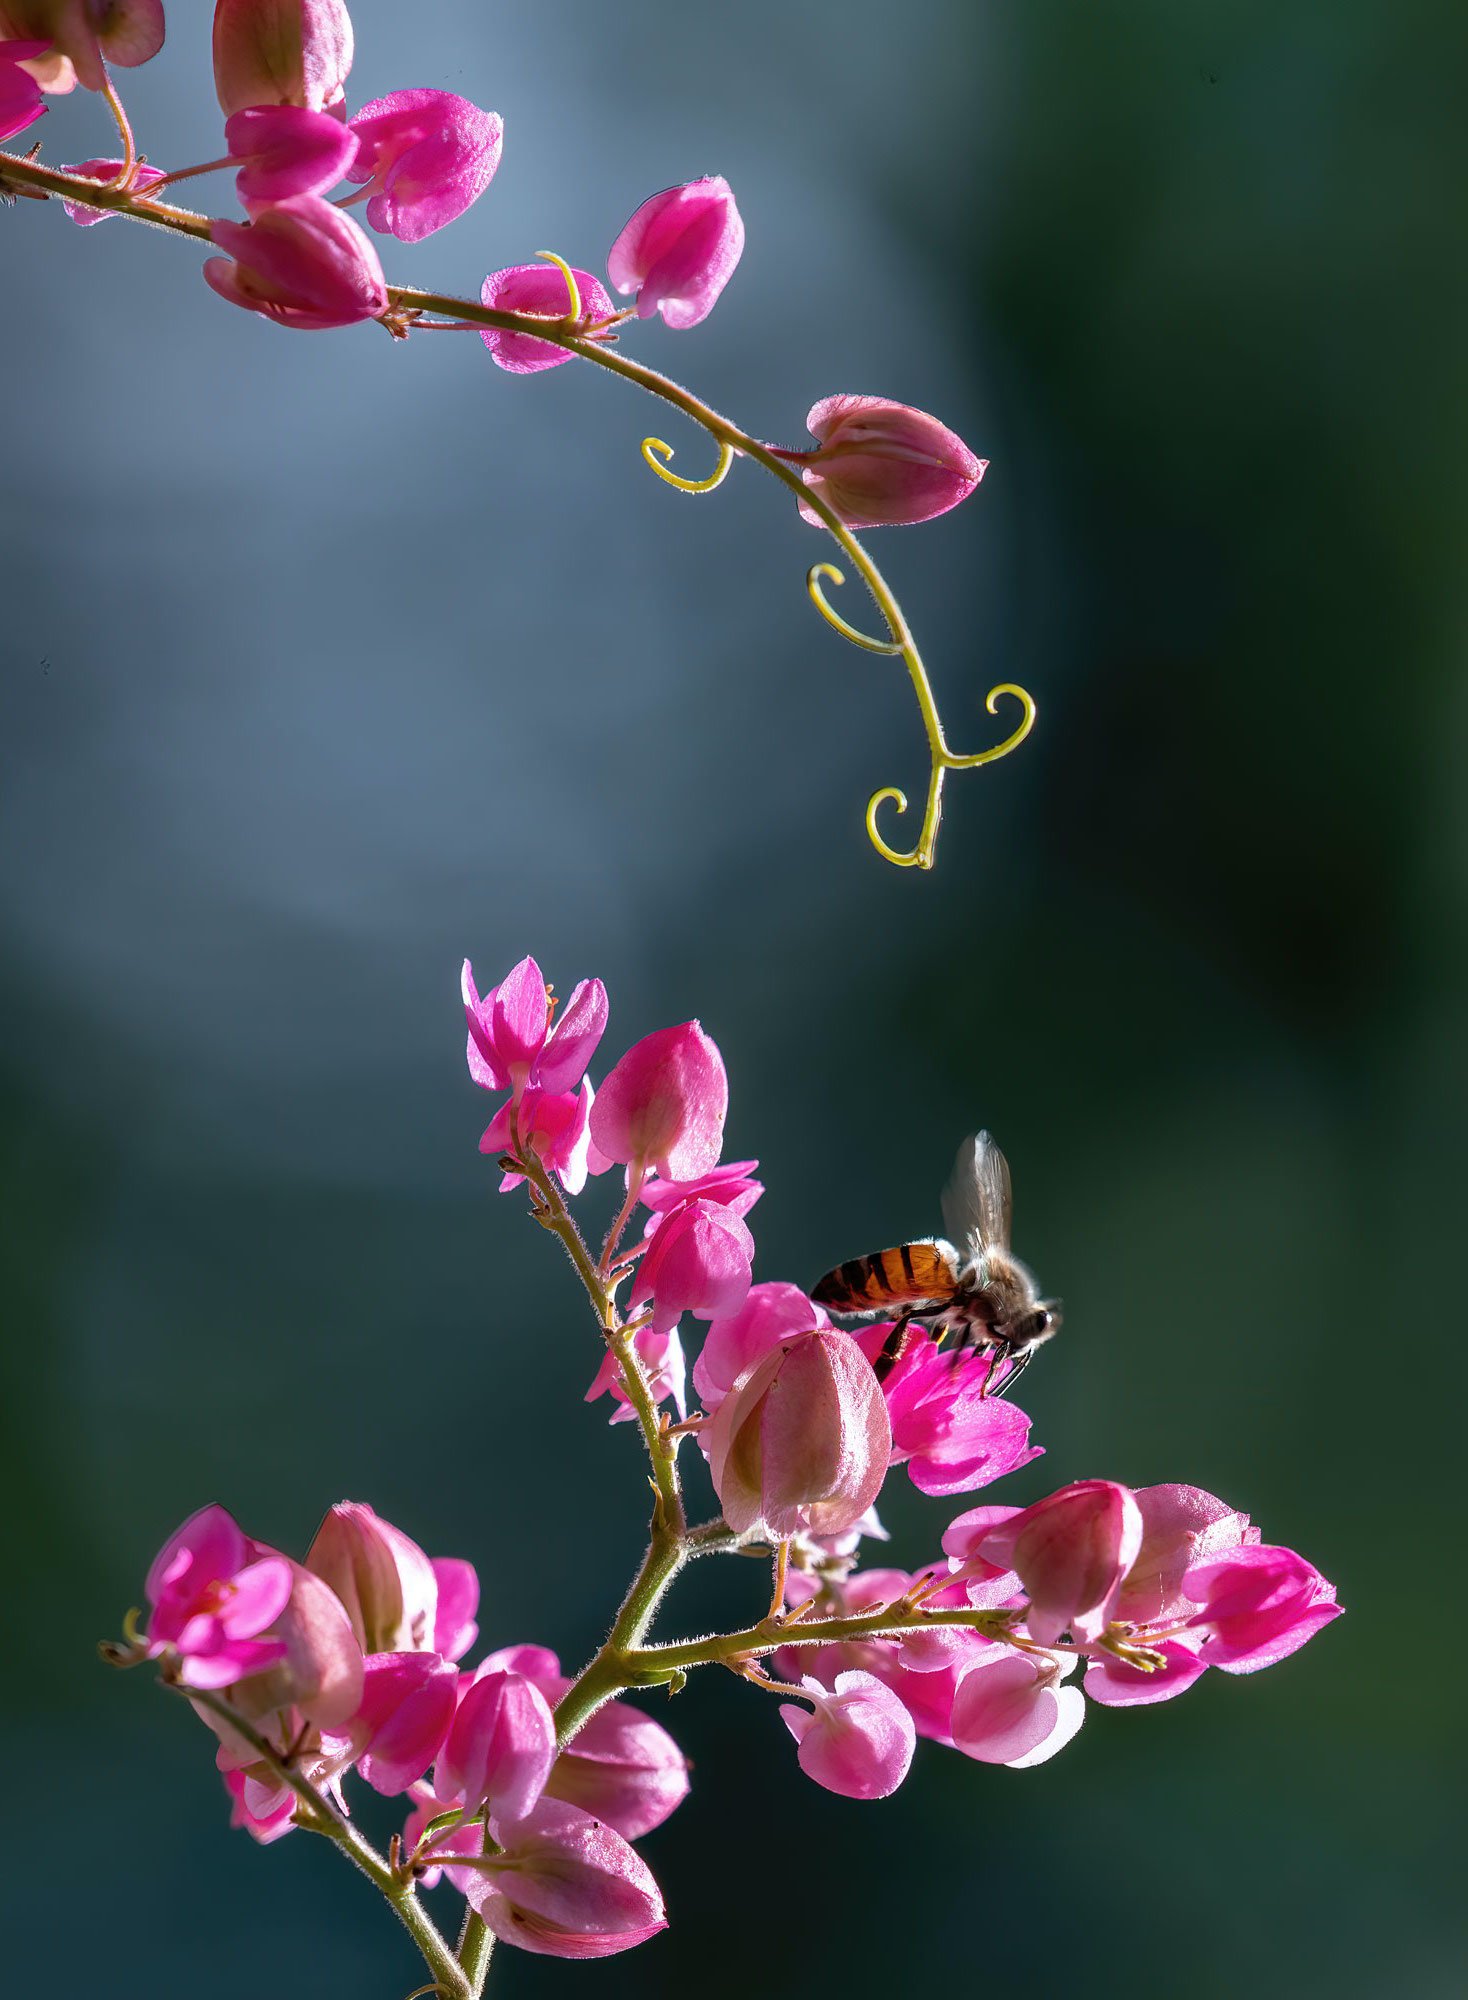 Bee on sweet pea flower